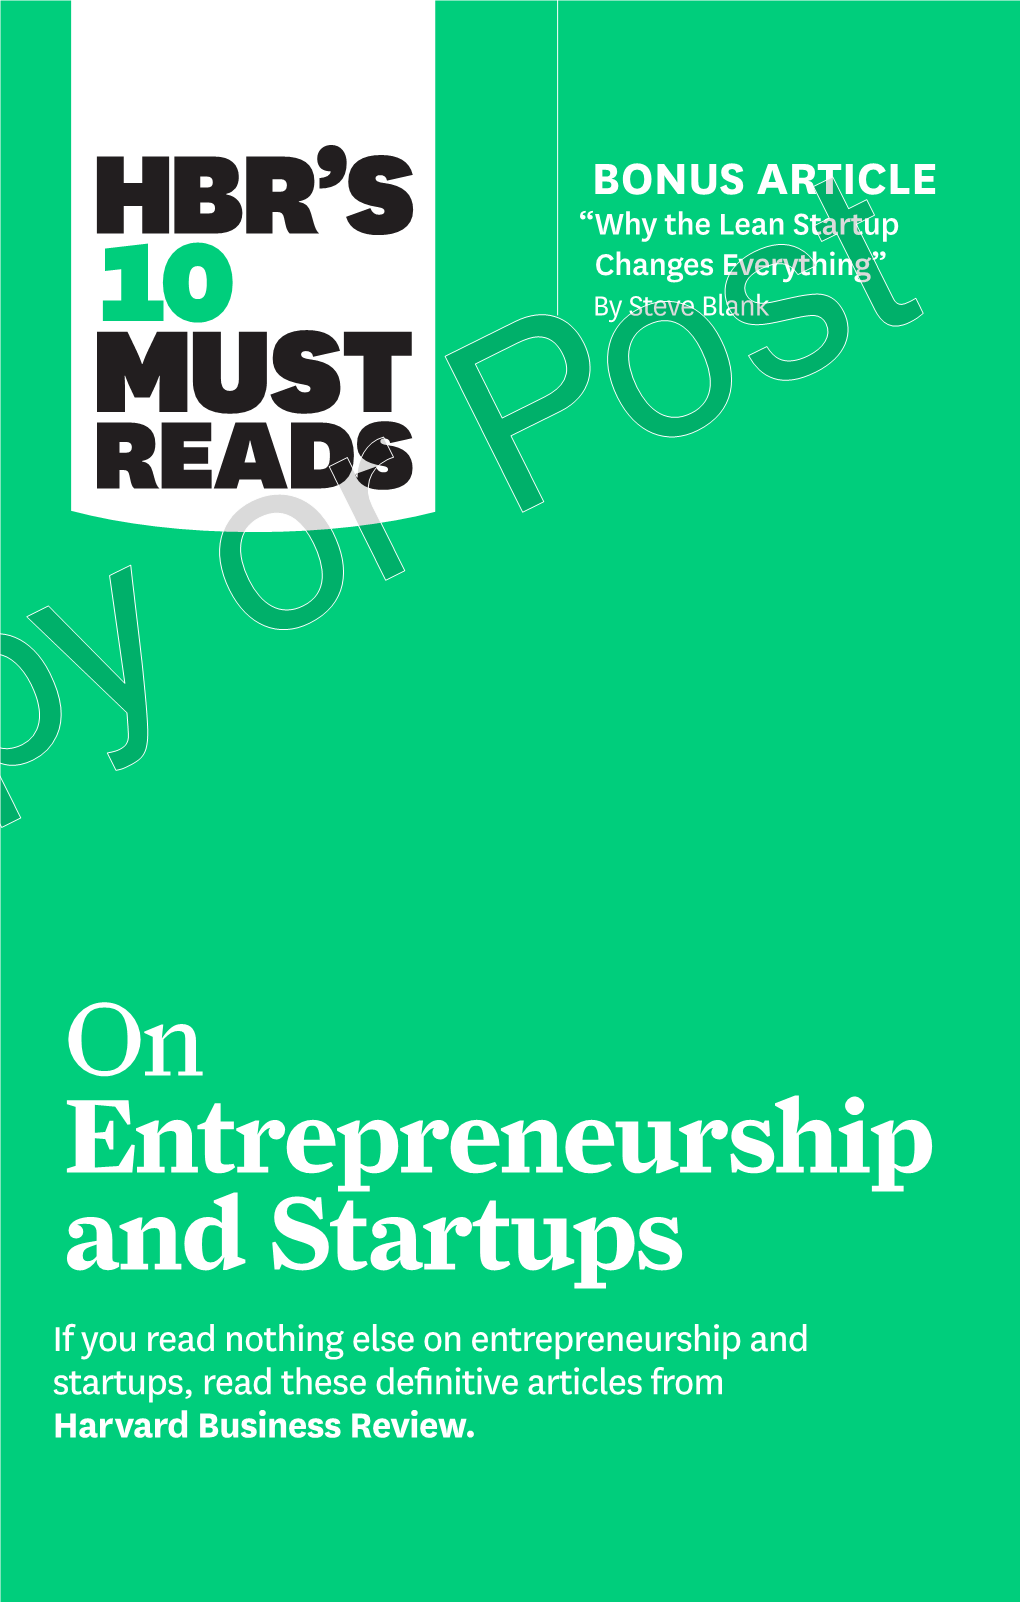 HBR's 10 Must Reads on Entrepreneurship and Startups